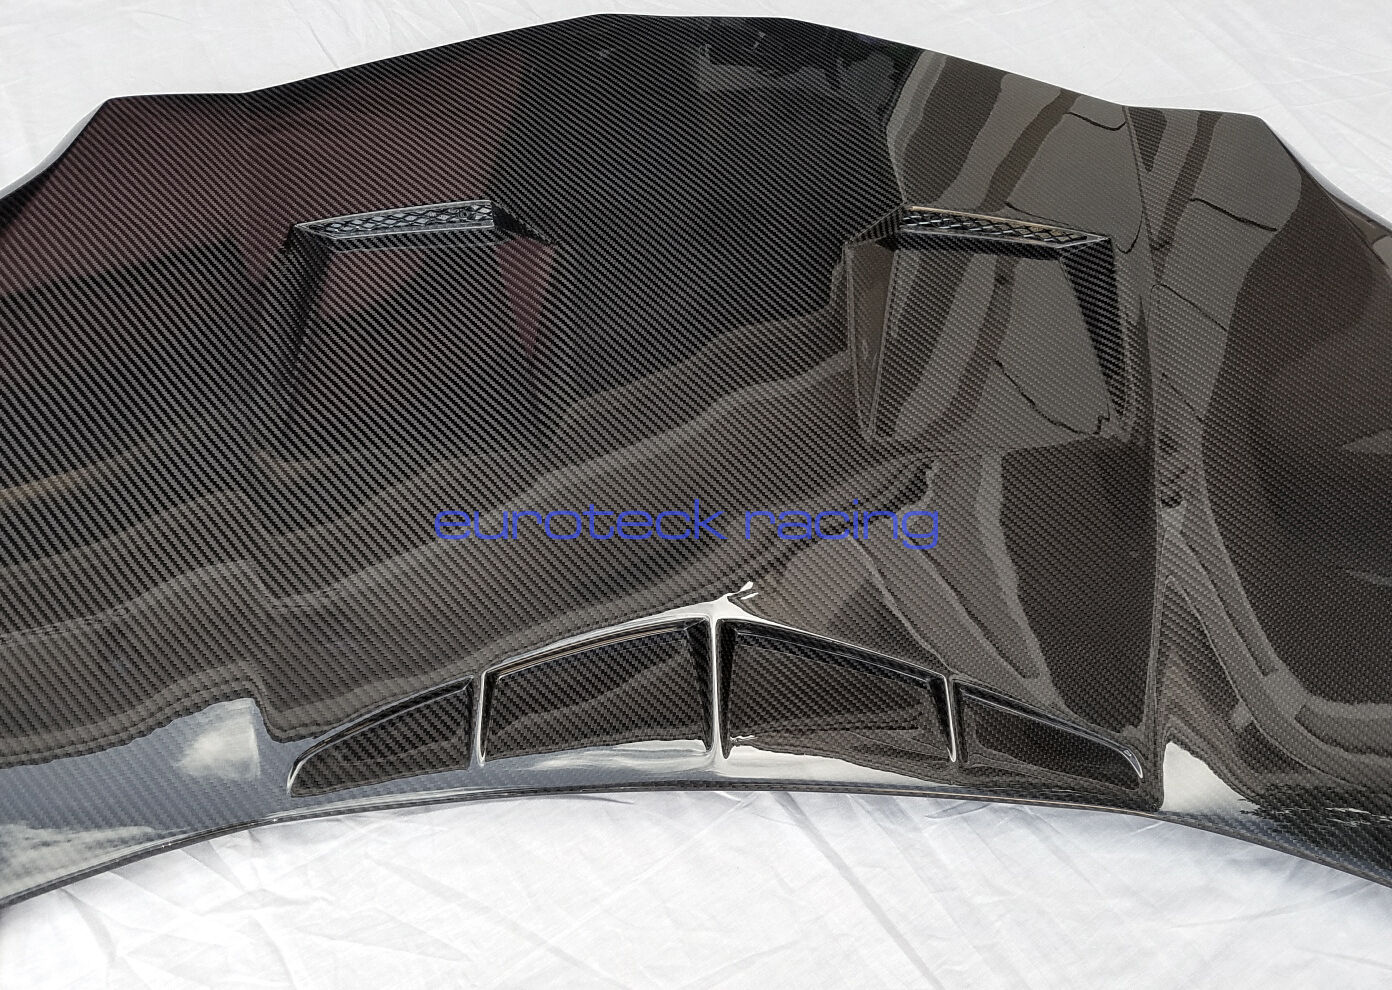 Lamborghini Aventador Carbon Fiber Front Hood Bonnet With Custom Intakes & Vents